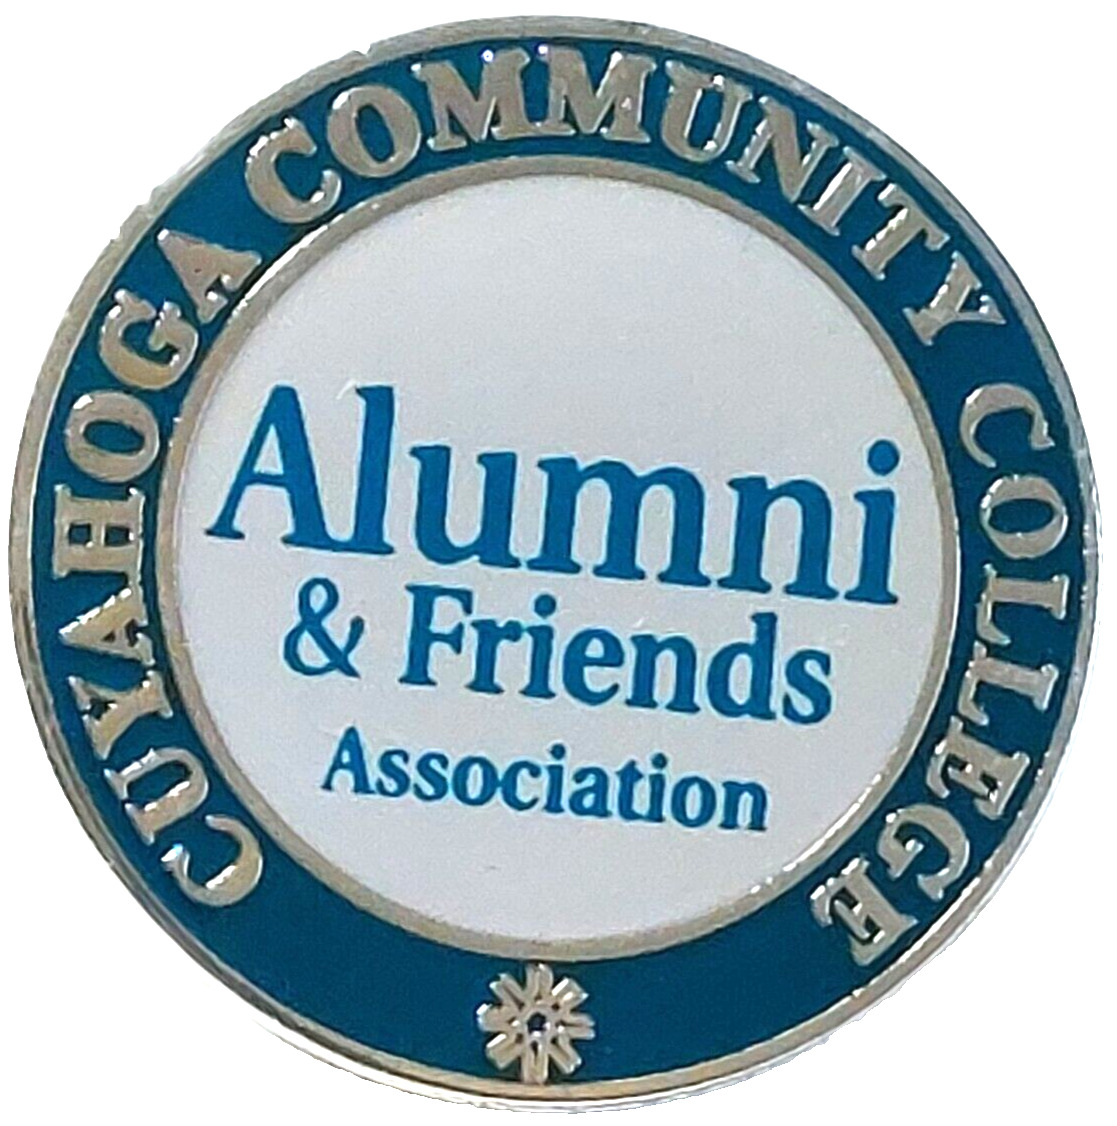 Cuyahoga Community College Alumni & Friends Association Lapel Pin